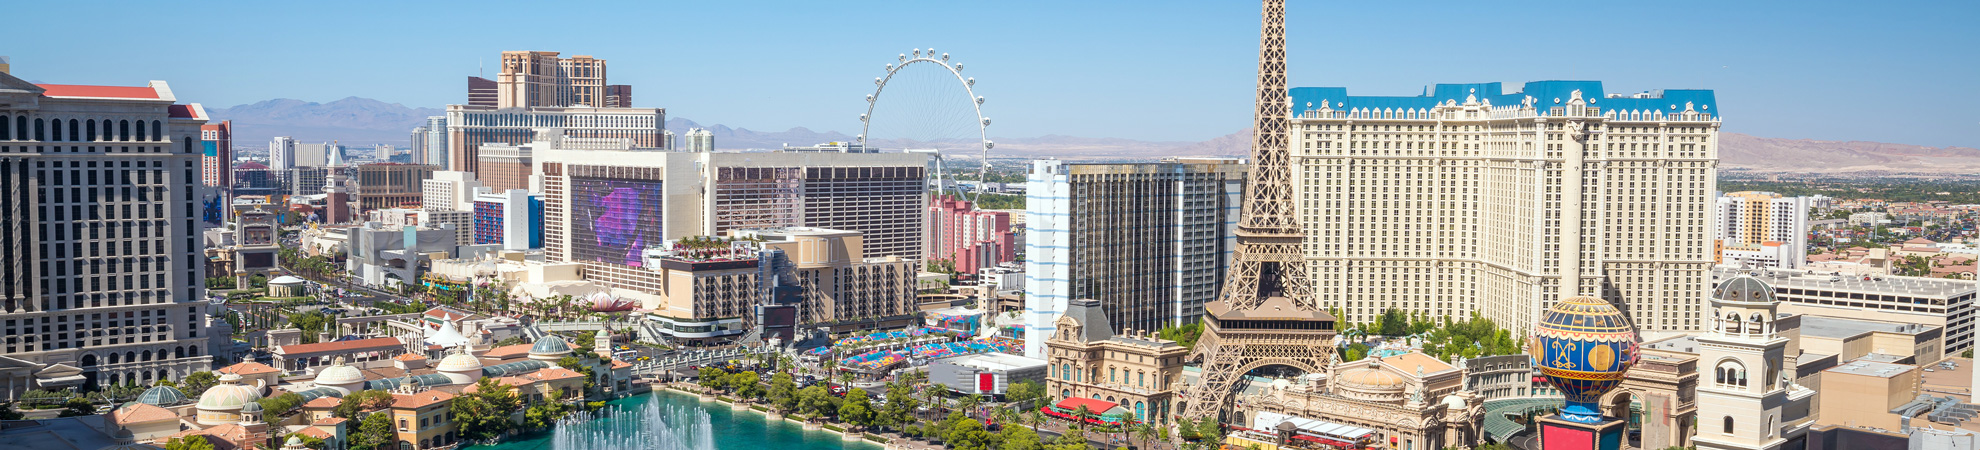 Visiter Las Vegas en 2 jours